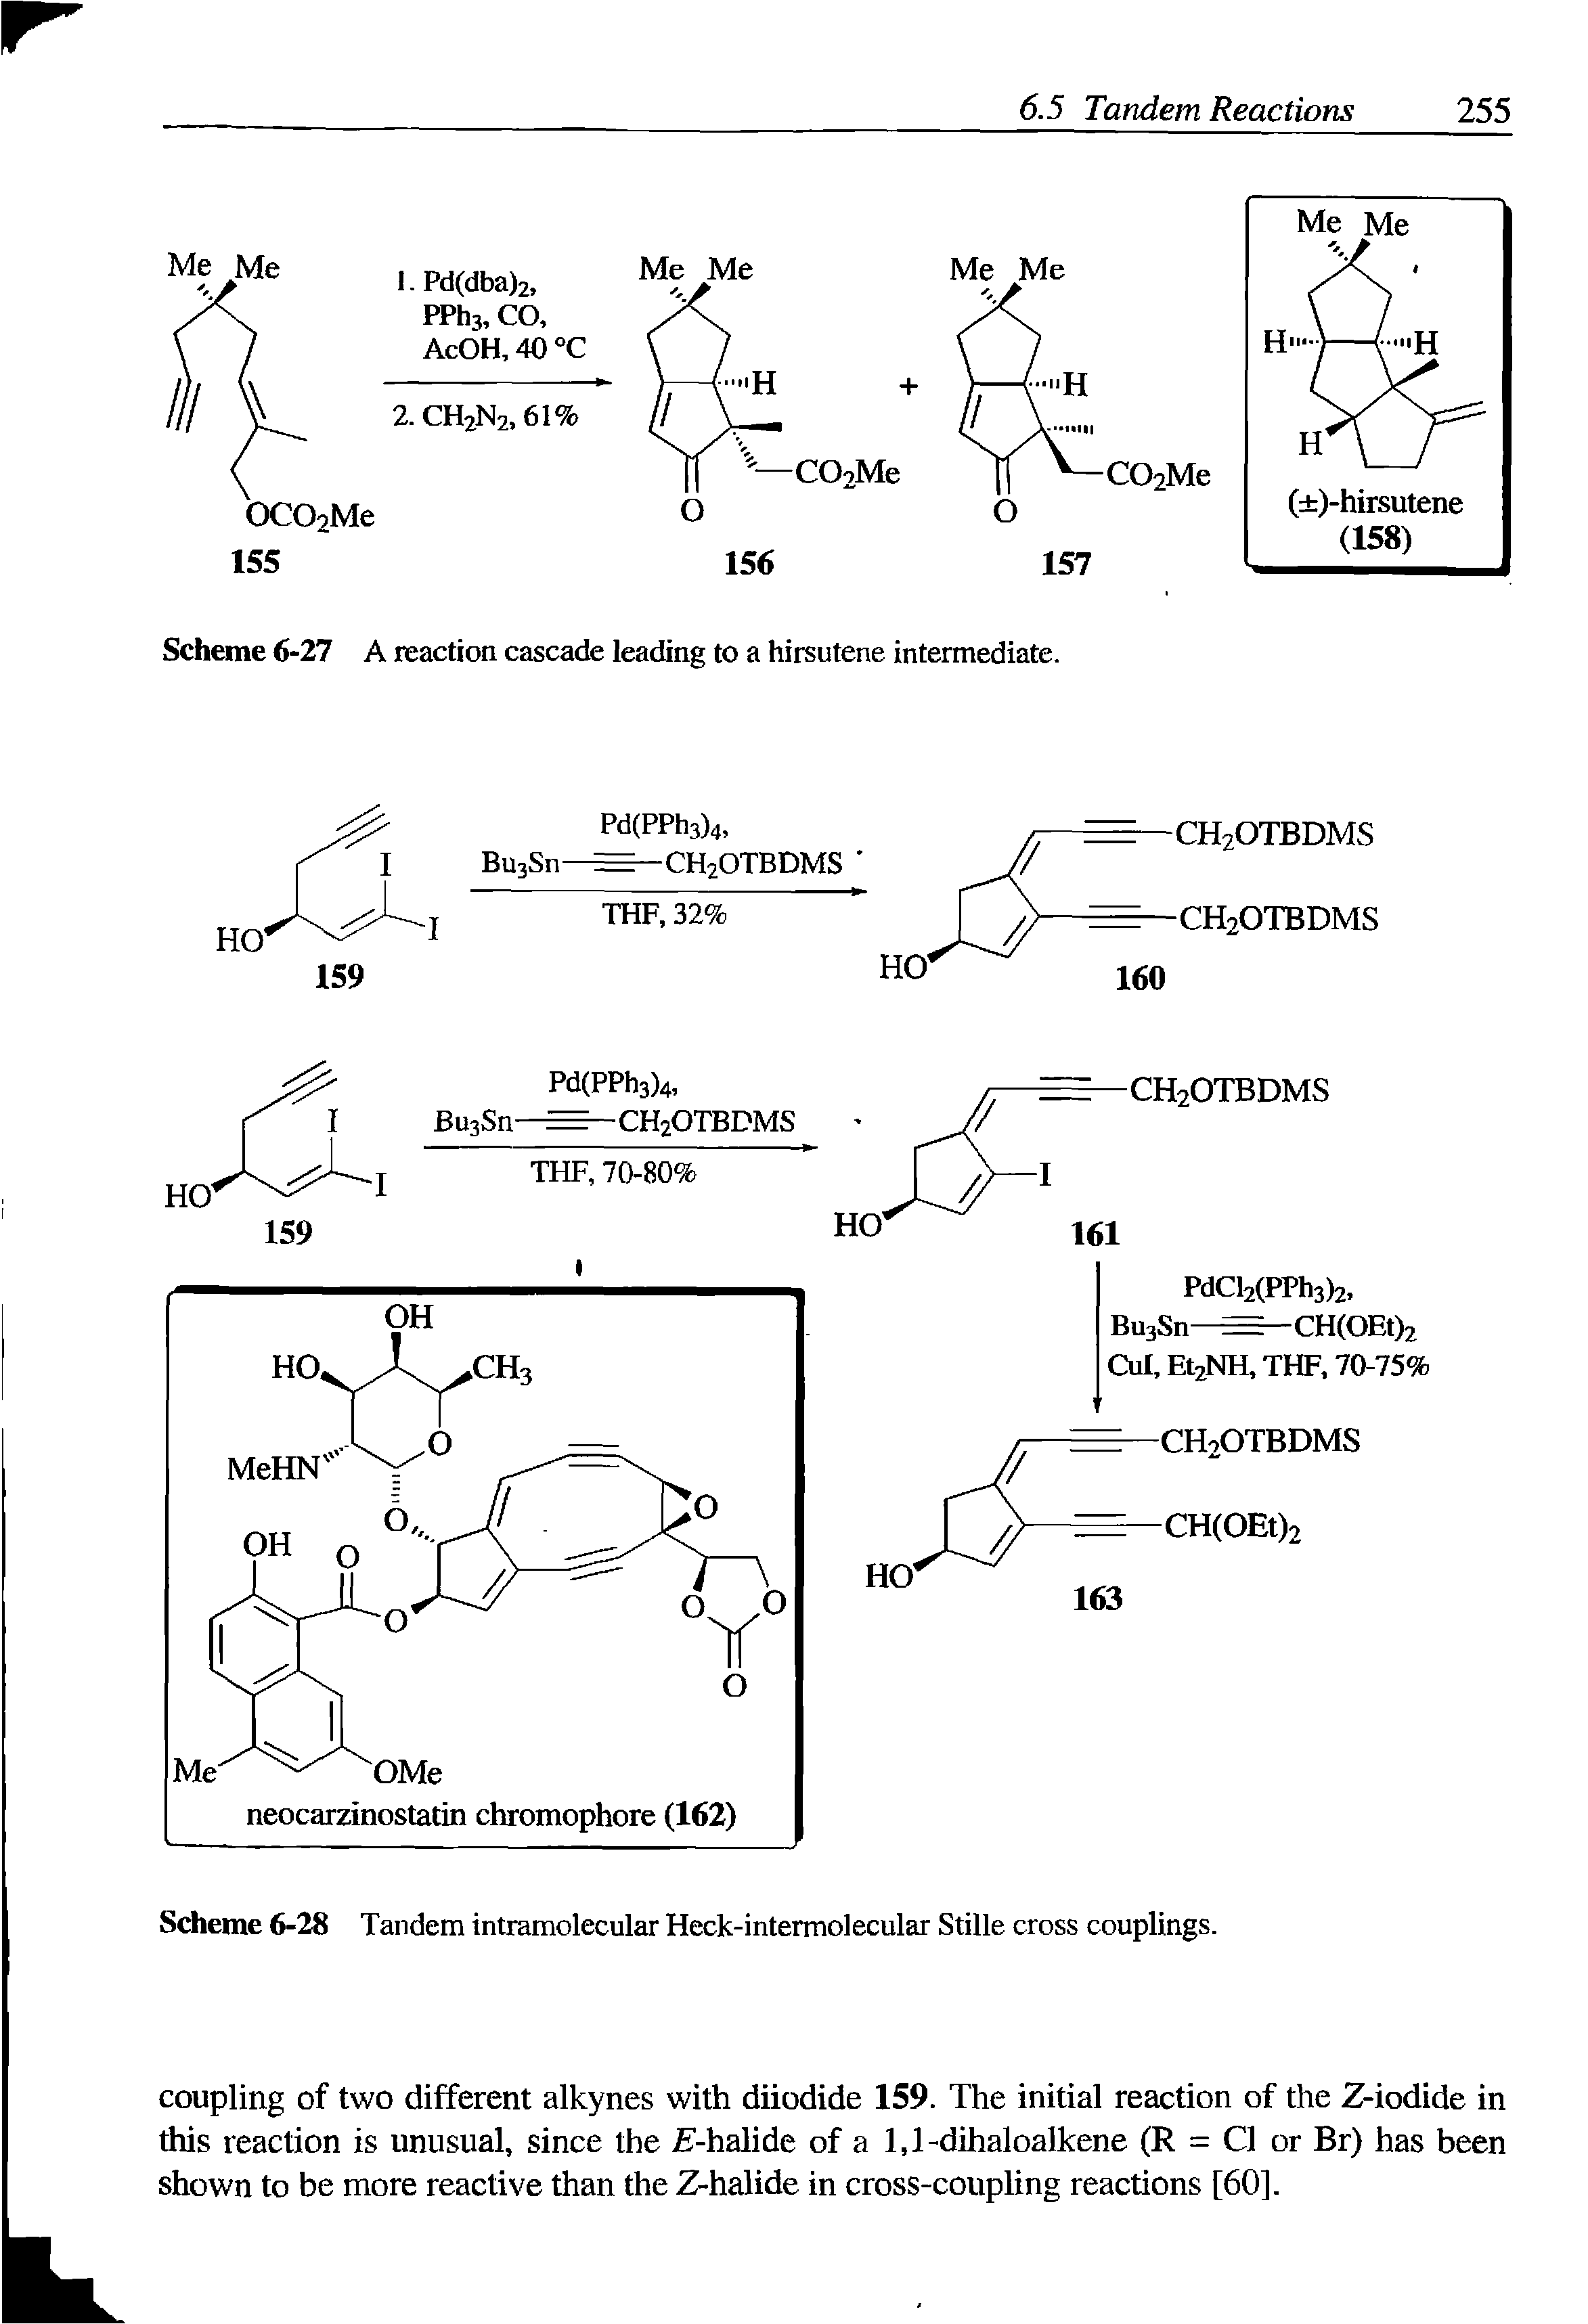 Scheme 6-28 Tandem intramolecular Heck-intermolecular Stille cross couplings.